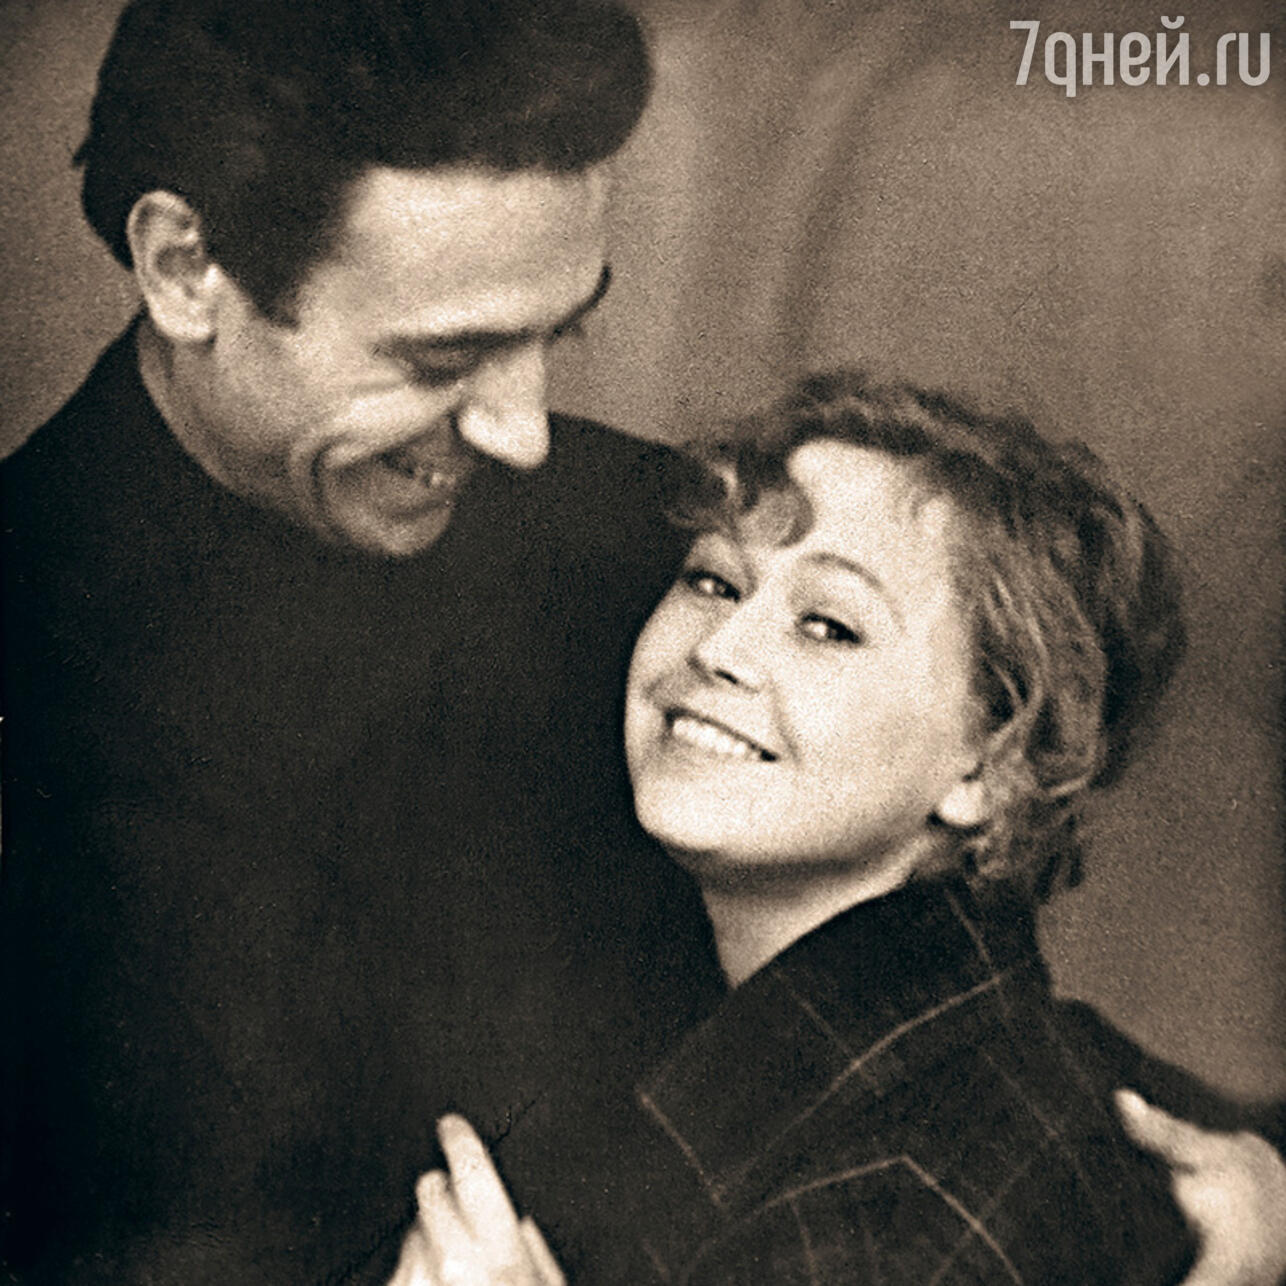 Светлана Немоляева с Александром Лазаревым